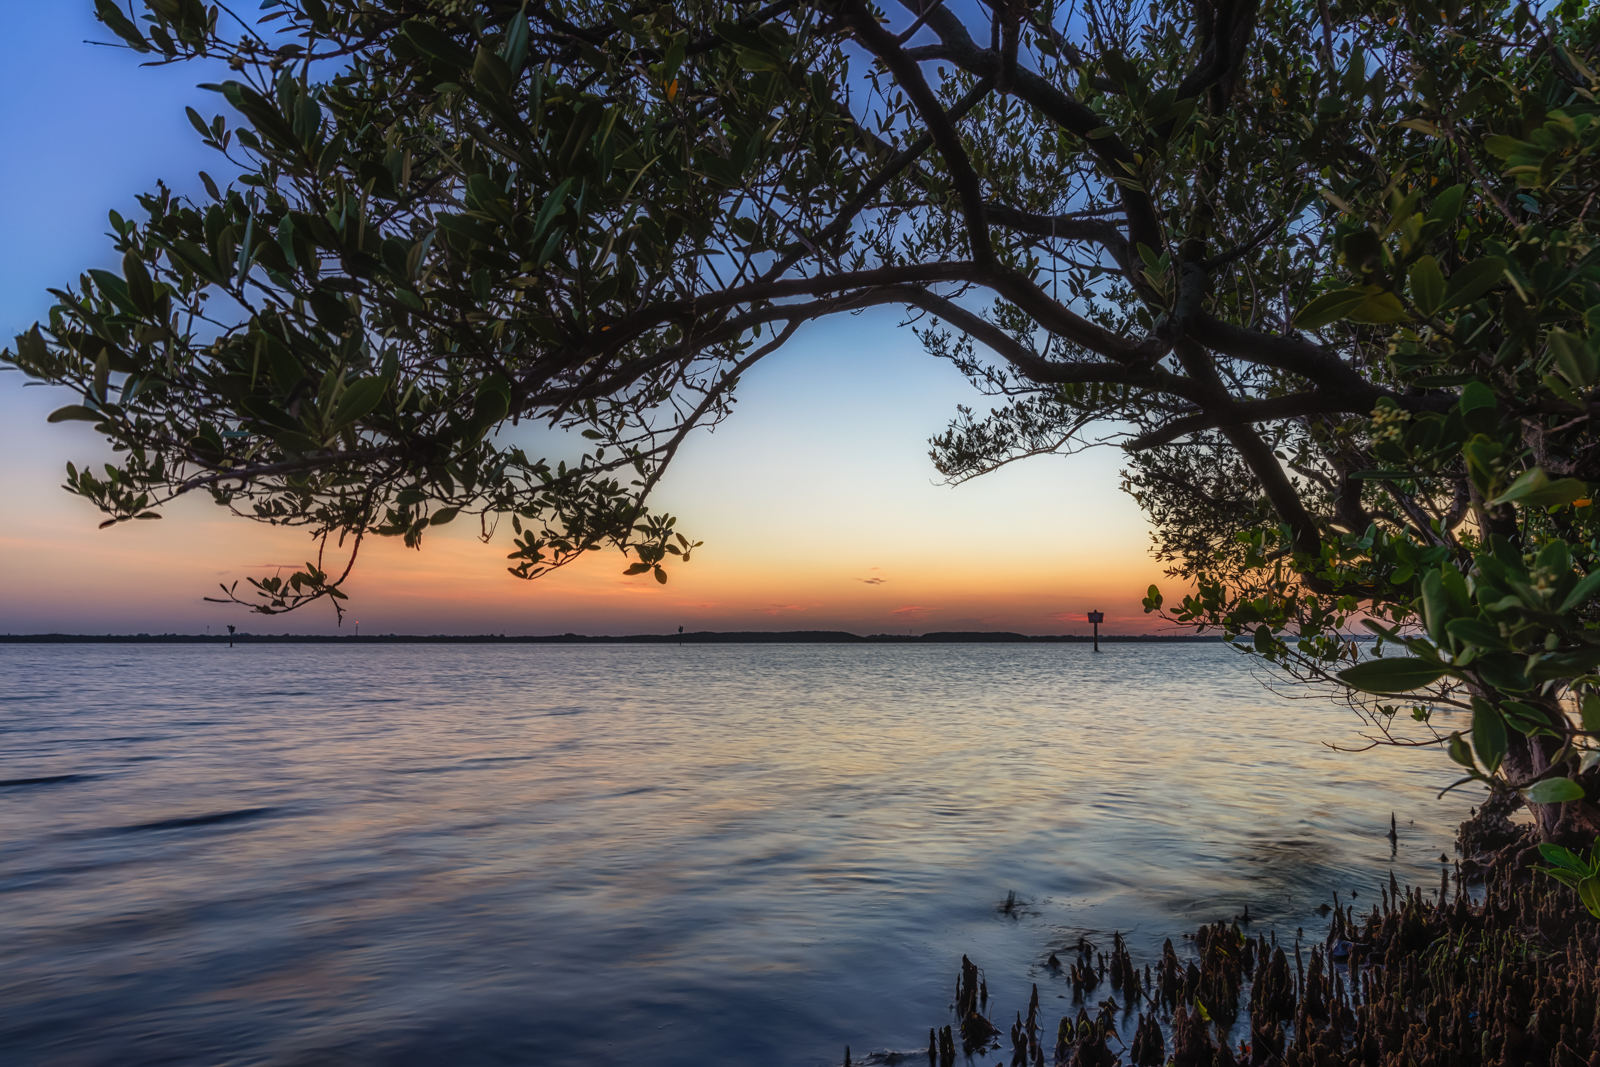 Under the Mangrove Tree, Tampa, Florida